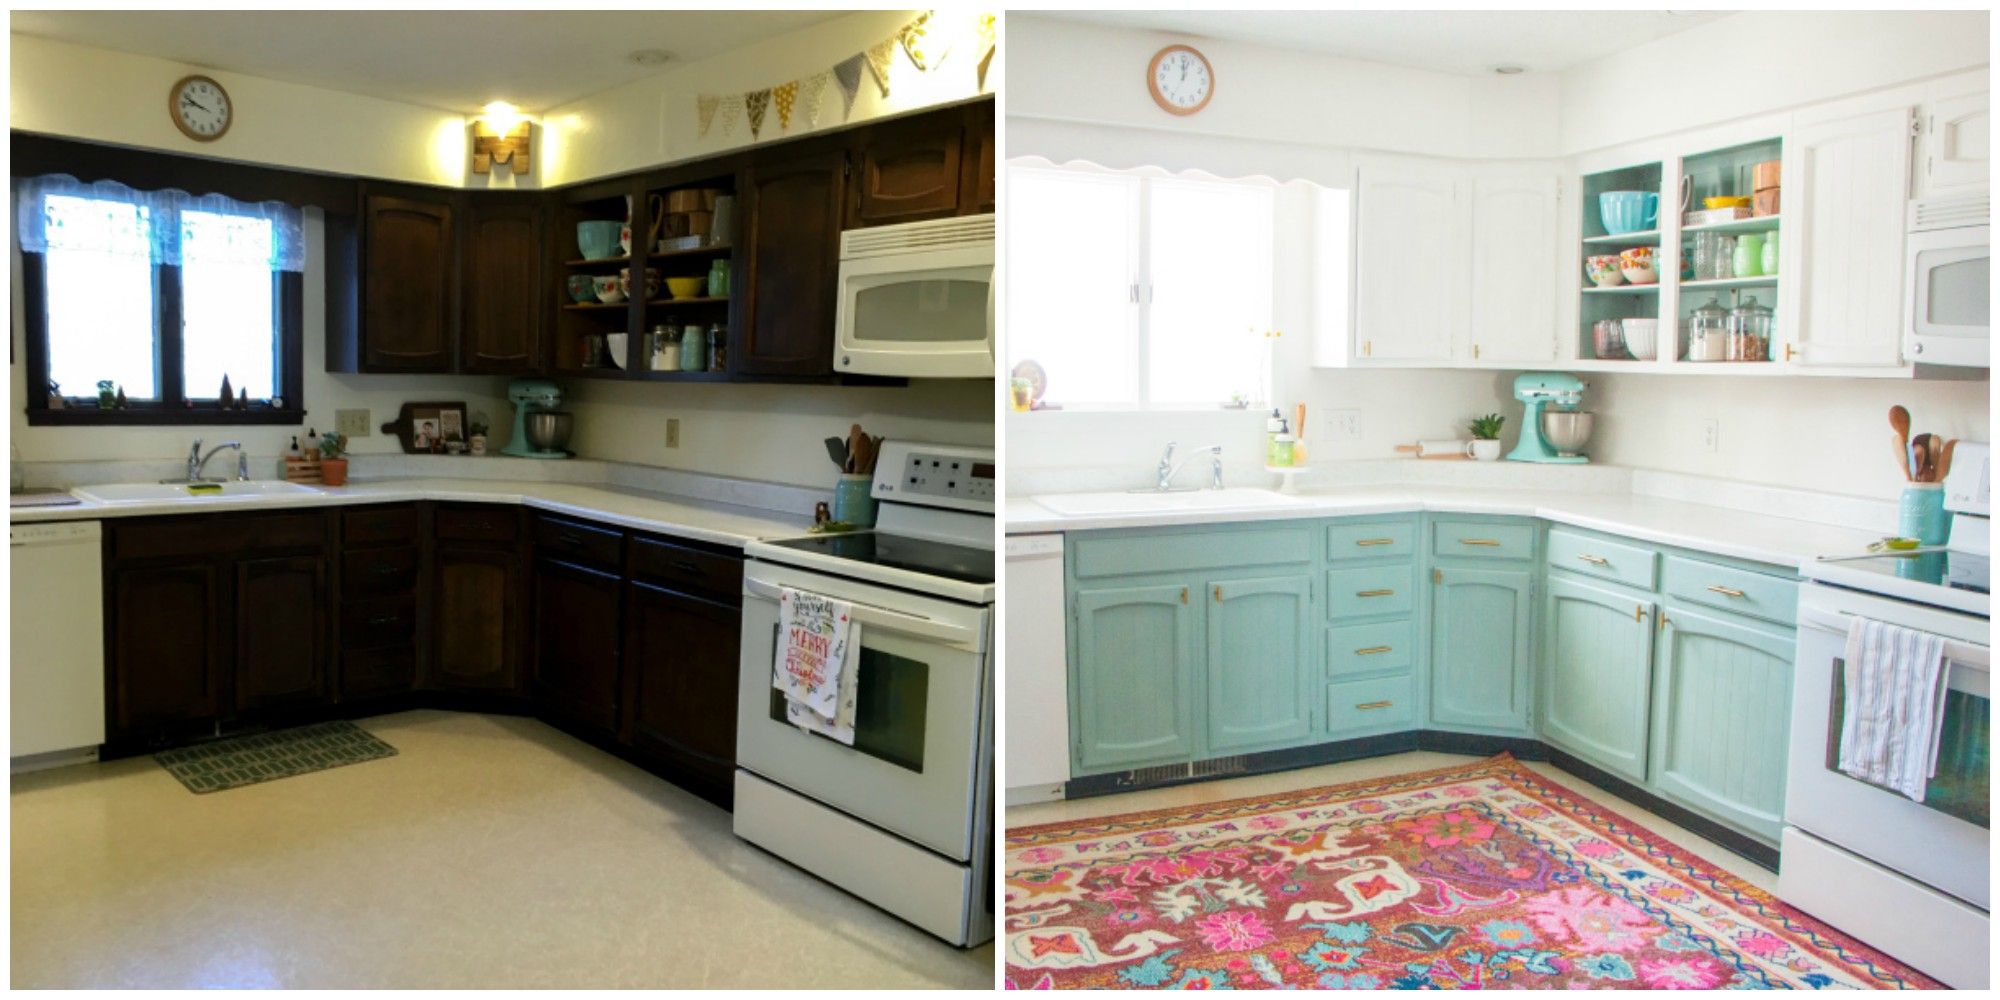 1490714707 250 kitchen makeover renovation update ideas inspiration before after بازسازی آشپزخانه قدیمی